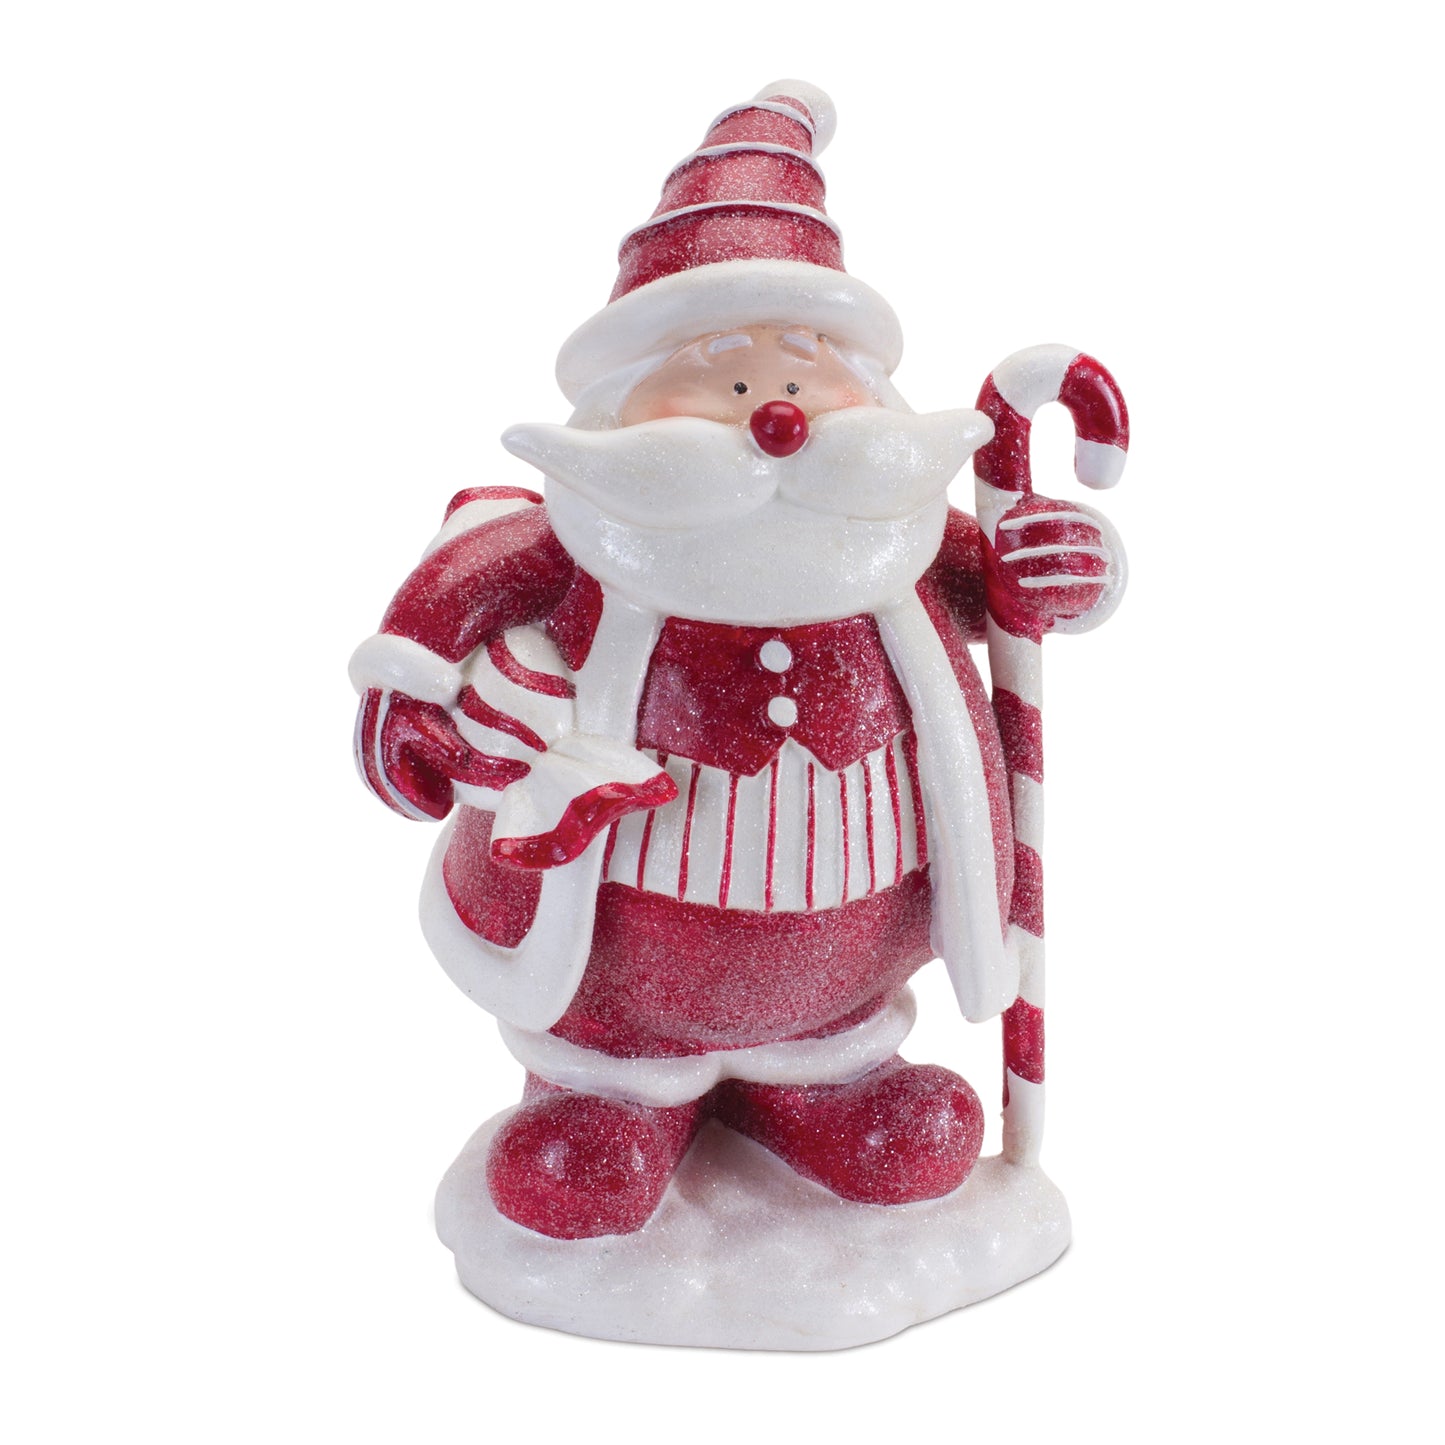 9"H Resin Santa w/Candy Cane